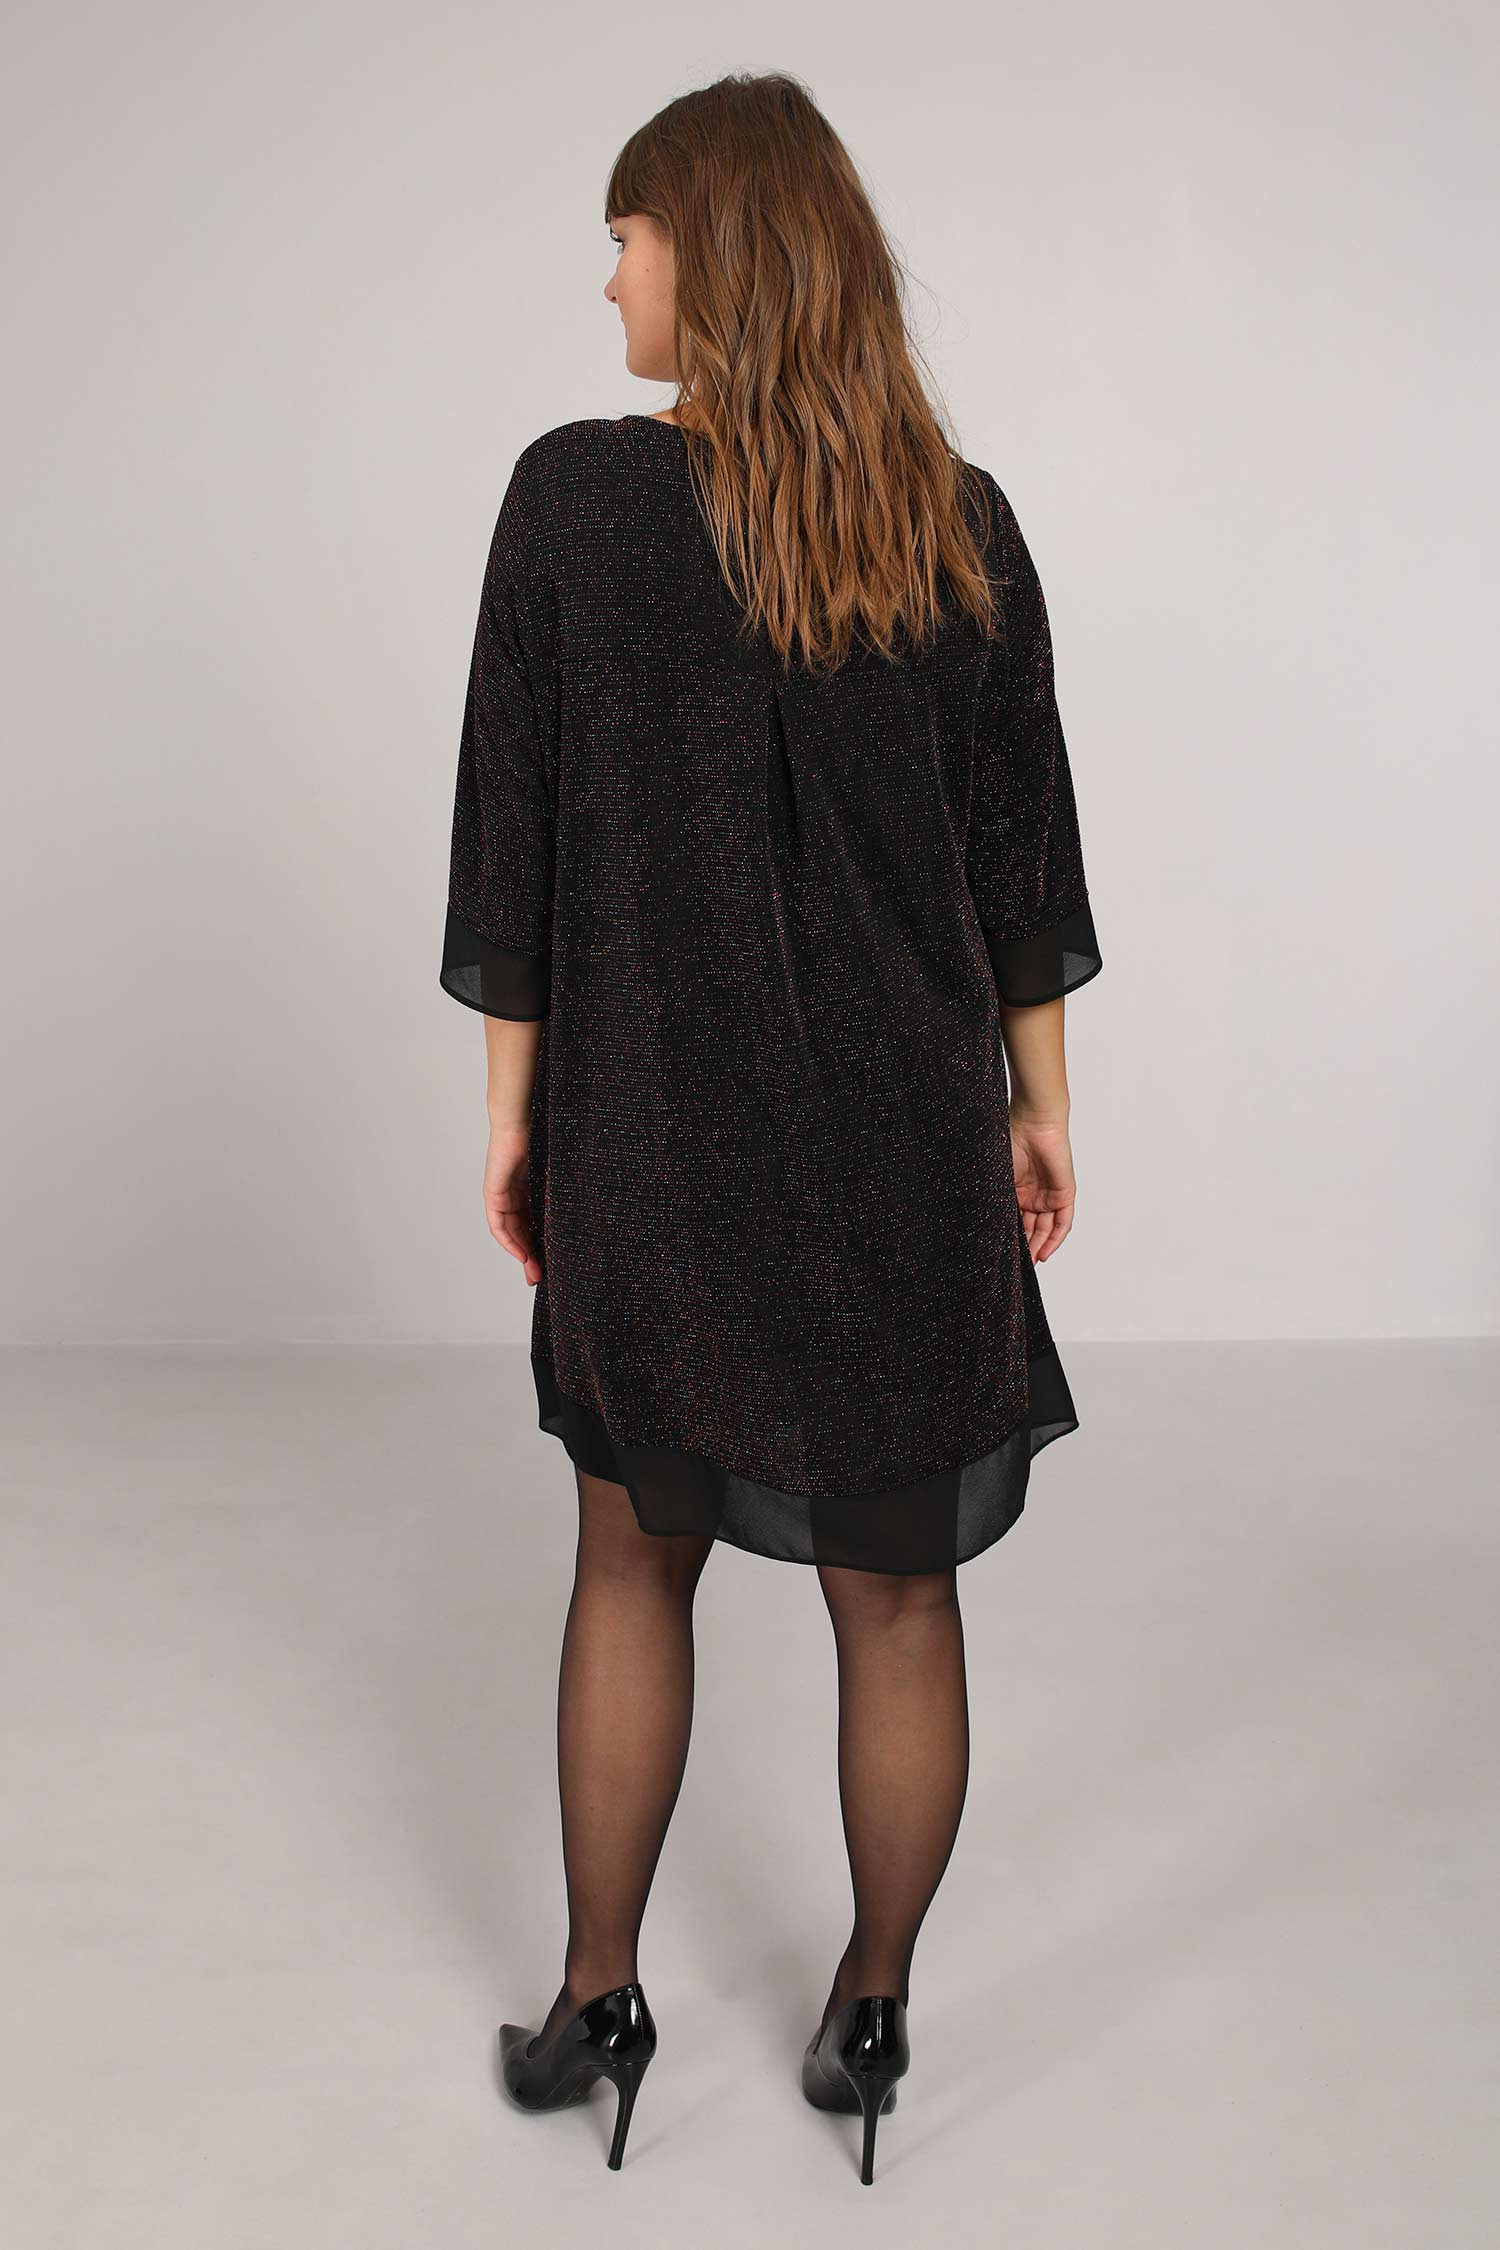 Sequin knit A-line dress